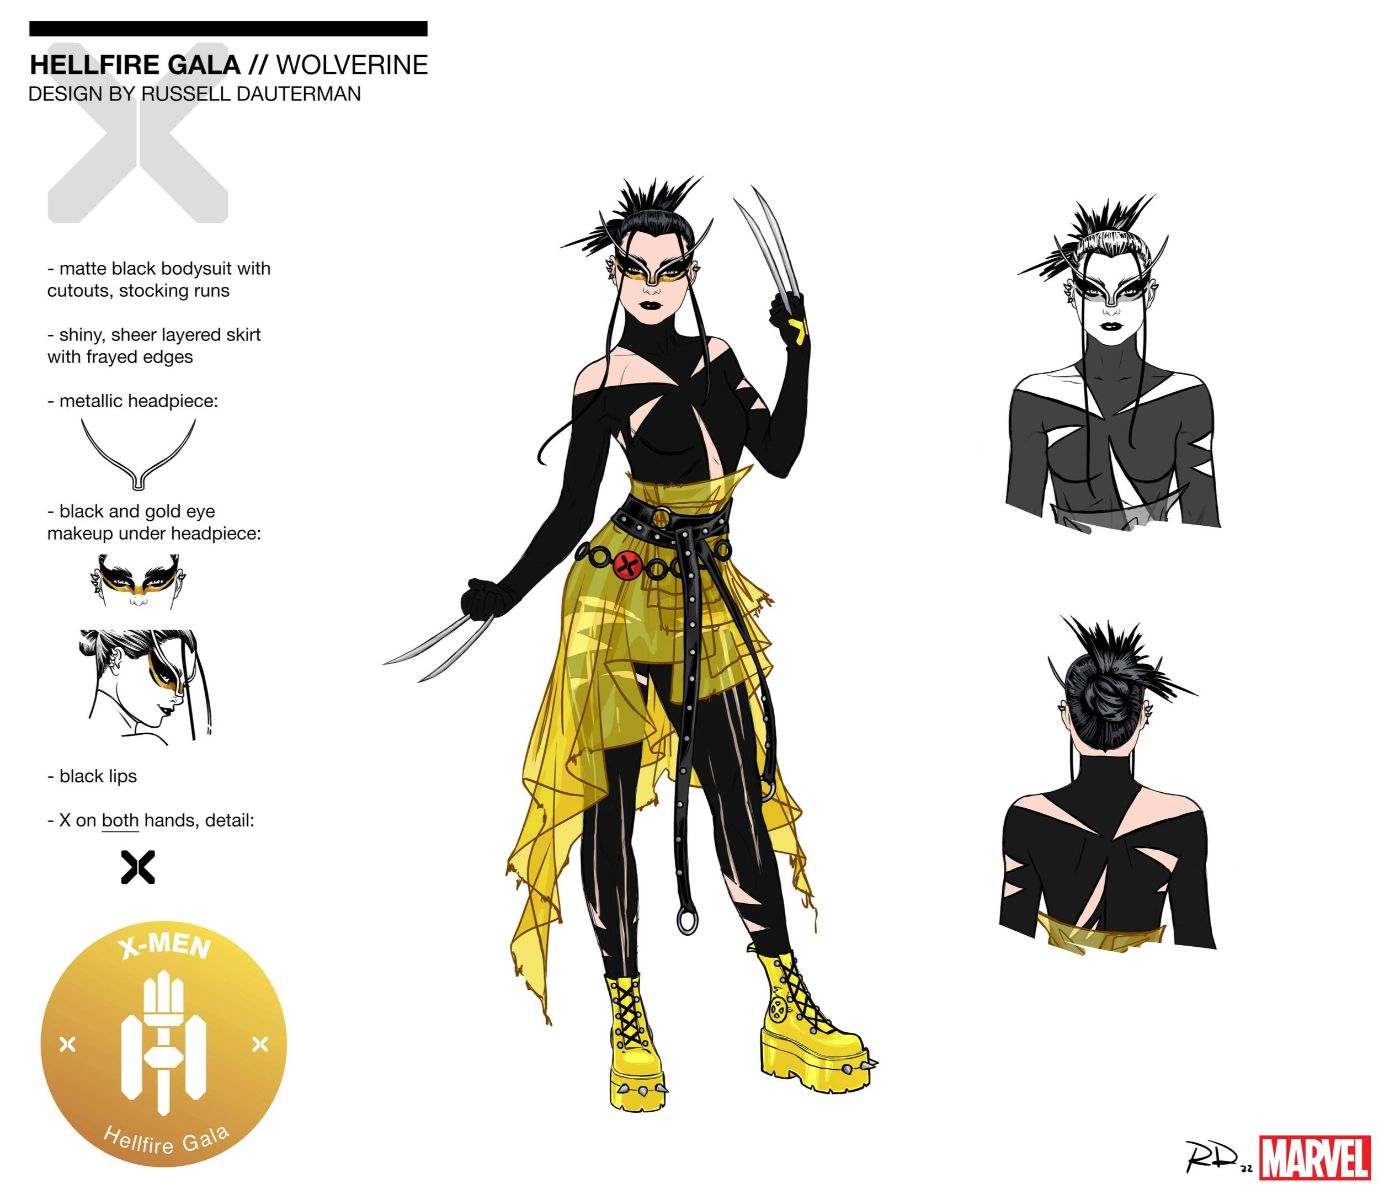 Wolverine’s Hellfire Gala Costume Puts a Stunning Twist on Logan’s Legacy